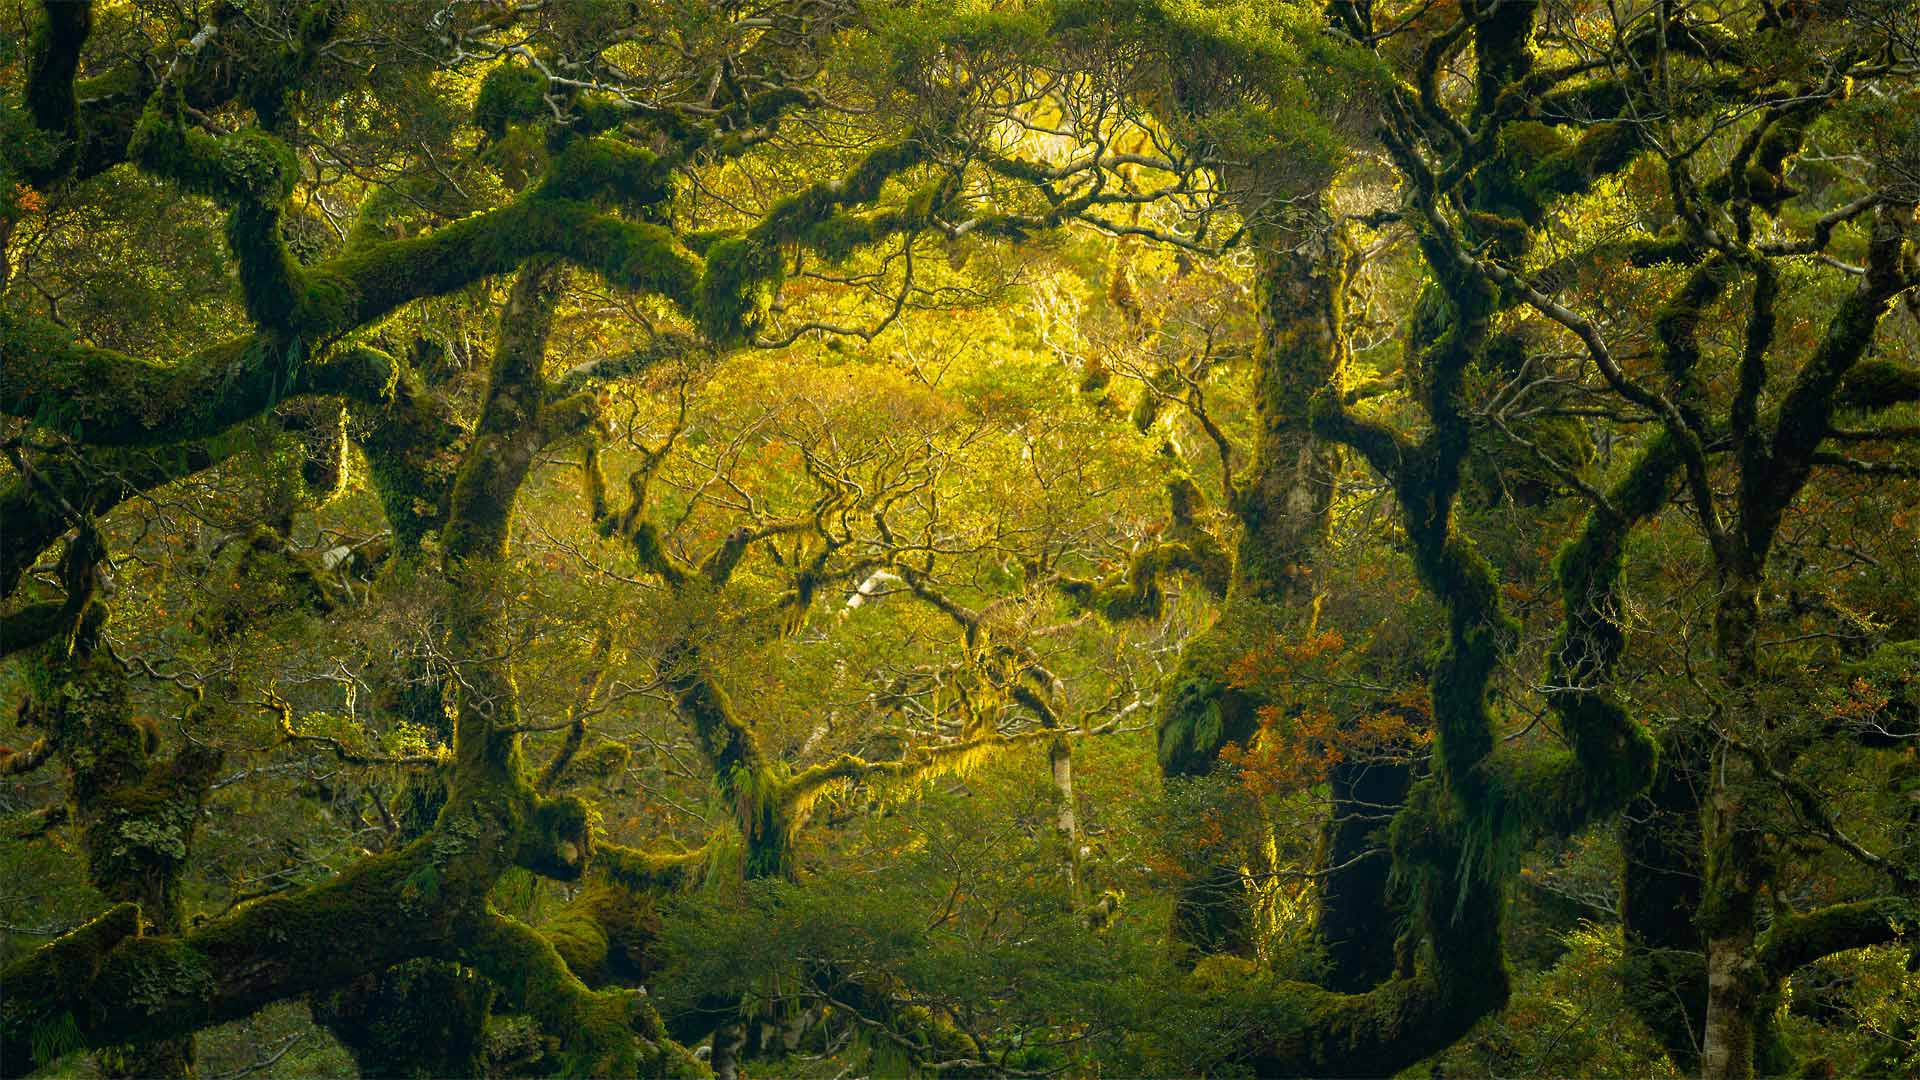 Rainforest hike near Milford Sound/Piopiotahi in New Zealand - Jim Patterson/Tandem Stills + Motion)